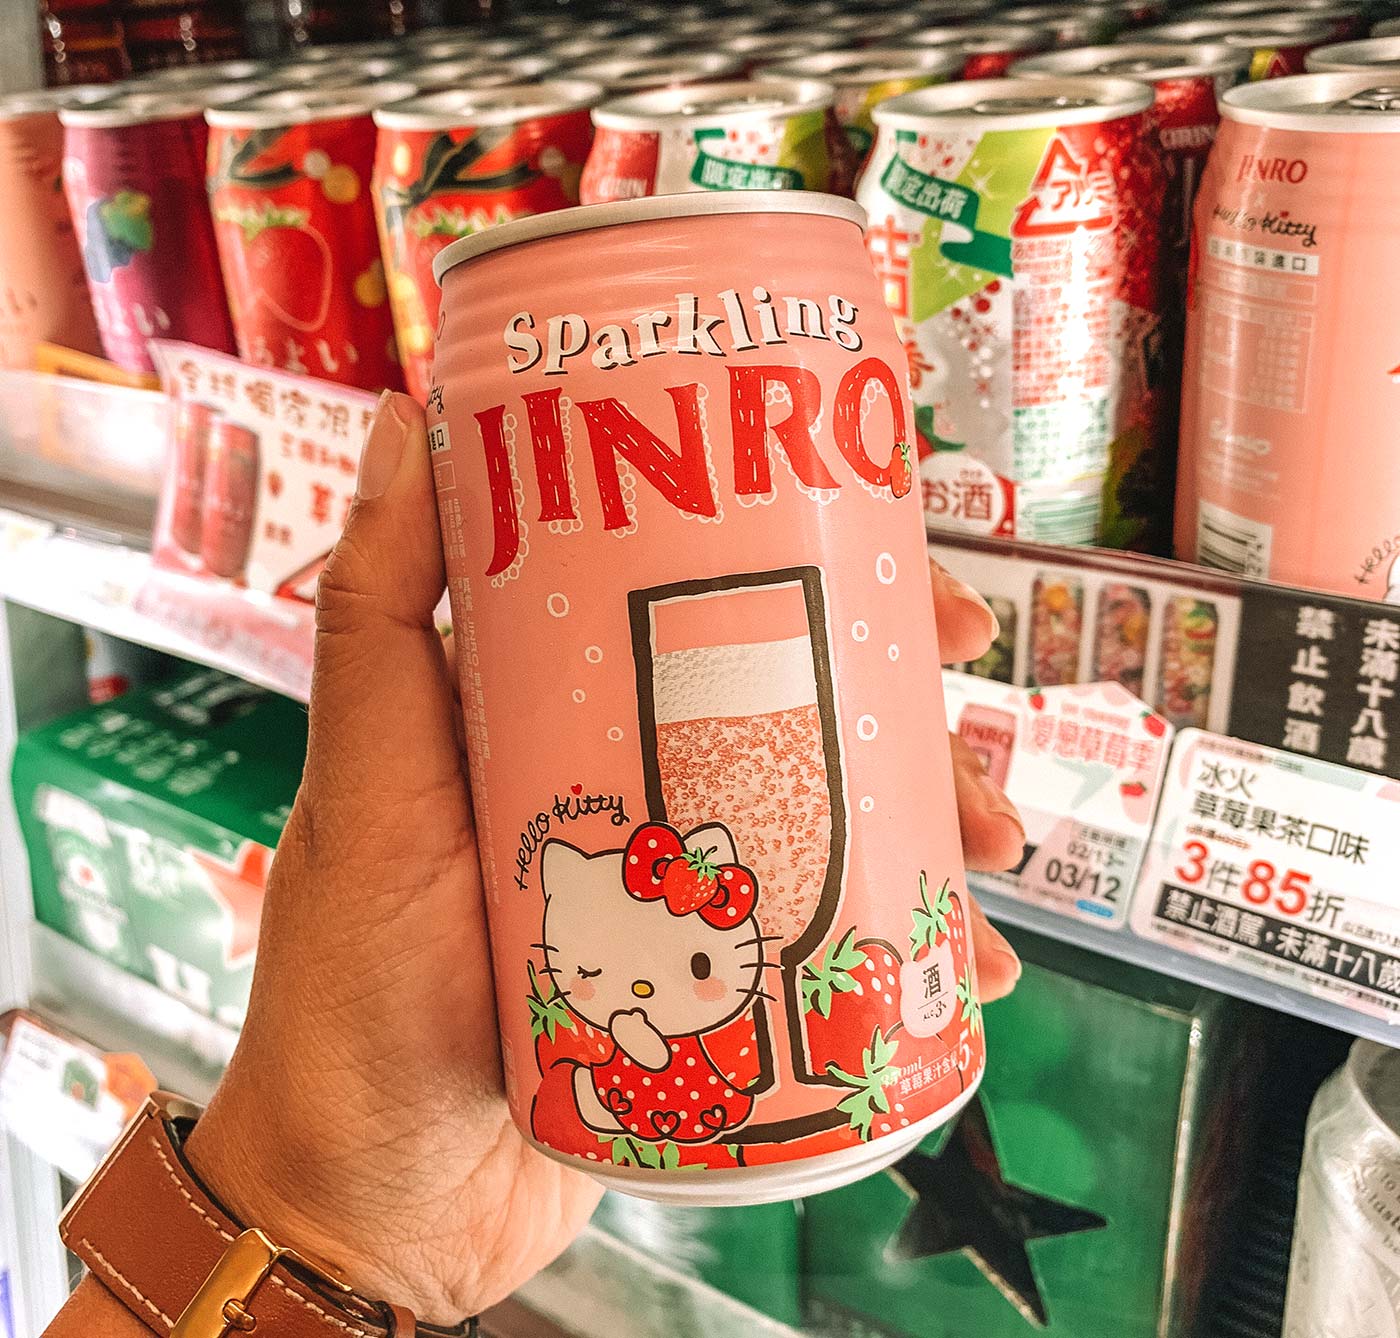 Taiwan 7-Eleven Hello Kitty sparkling strawberry wine 